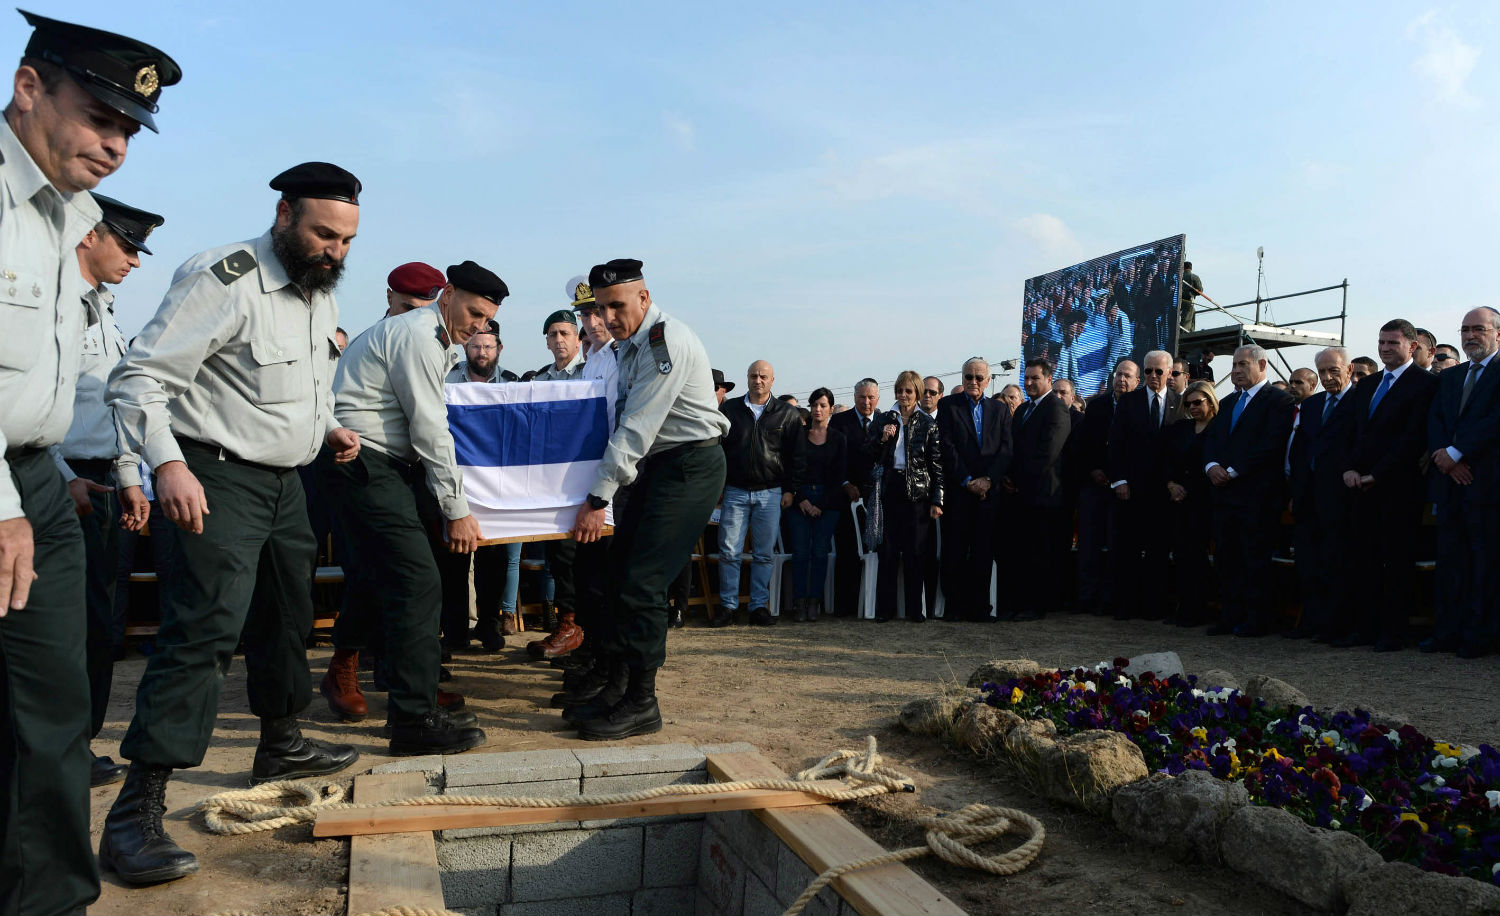 The funeral of Ariel Sharon on January 13, 2014 in Havat Hashikmim, Negev, Israel. Kobi Gideon / GPO via Getty Images.
